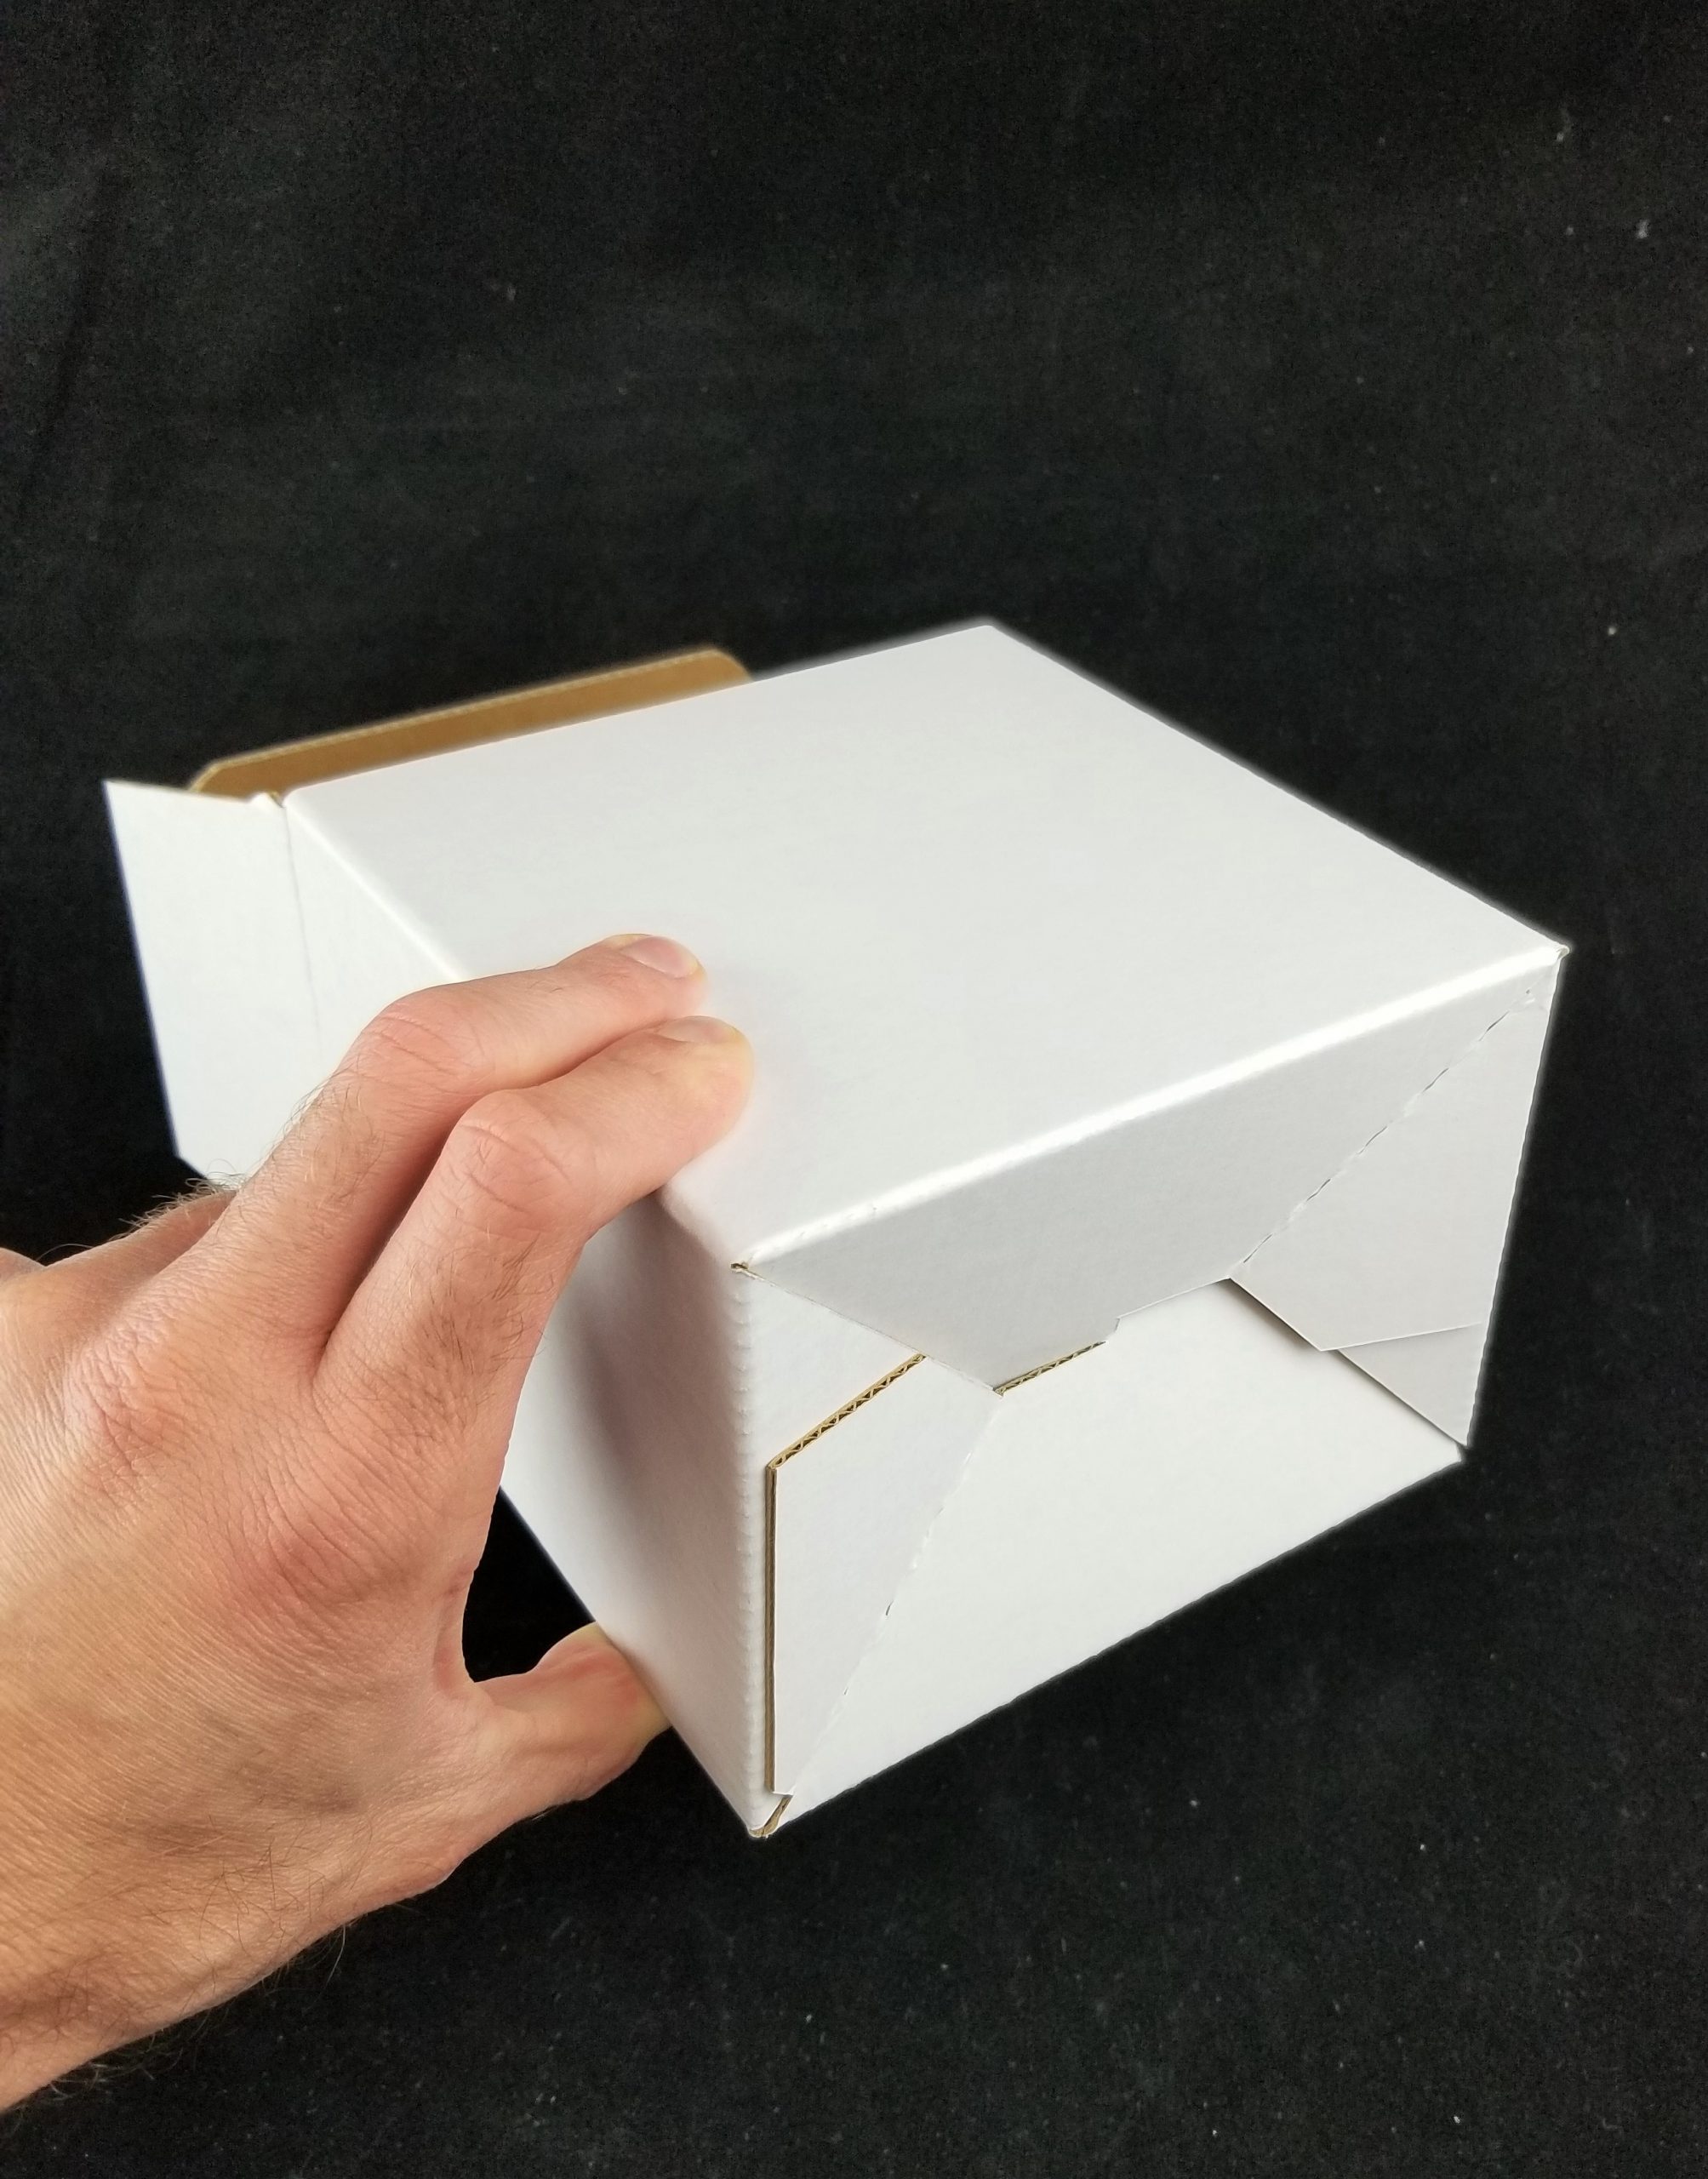 Auto-Lock Bottom Boxes